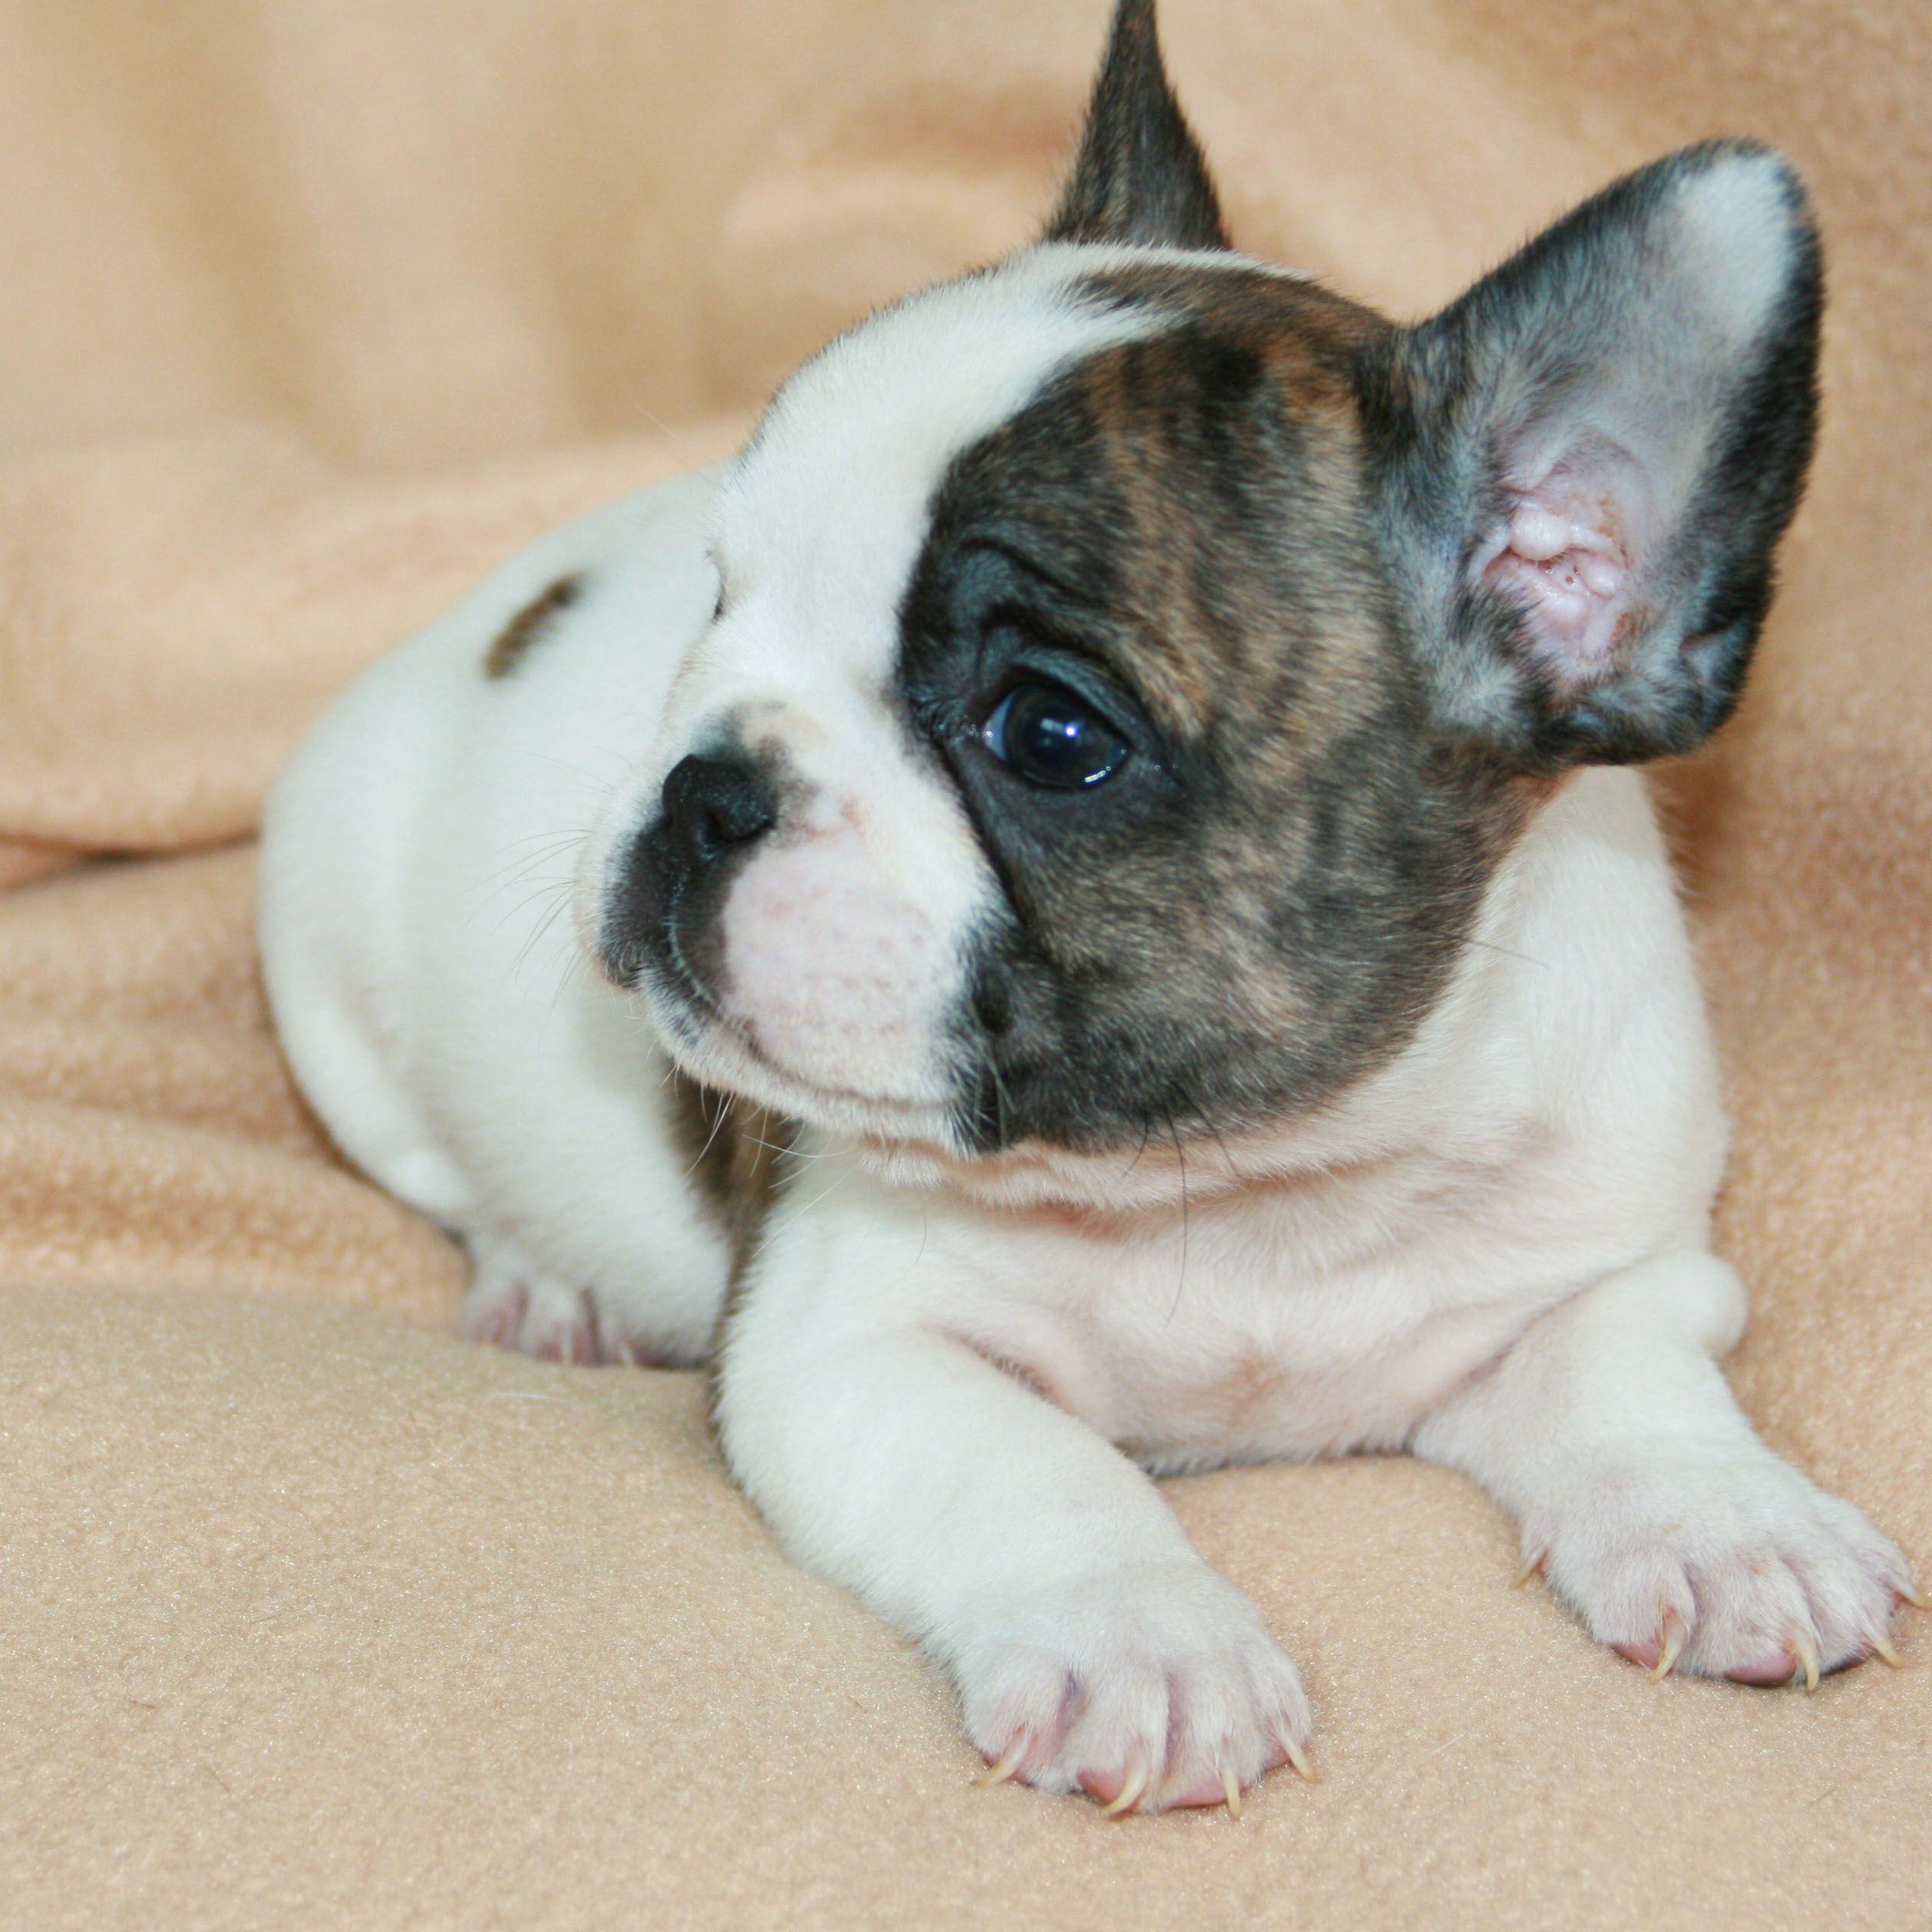 Baby French Bulldog Wallpapers - Top Free Baby French Bulldog ...